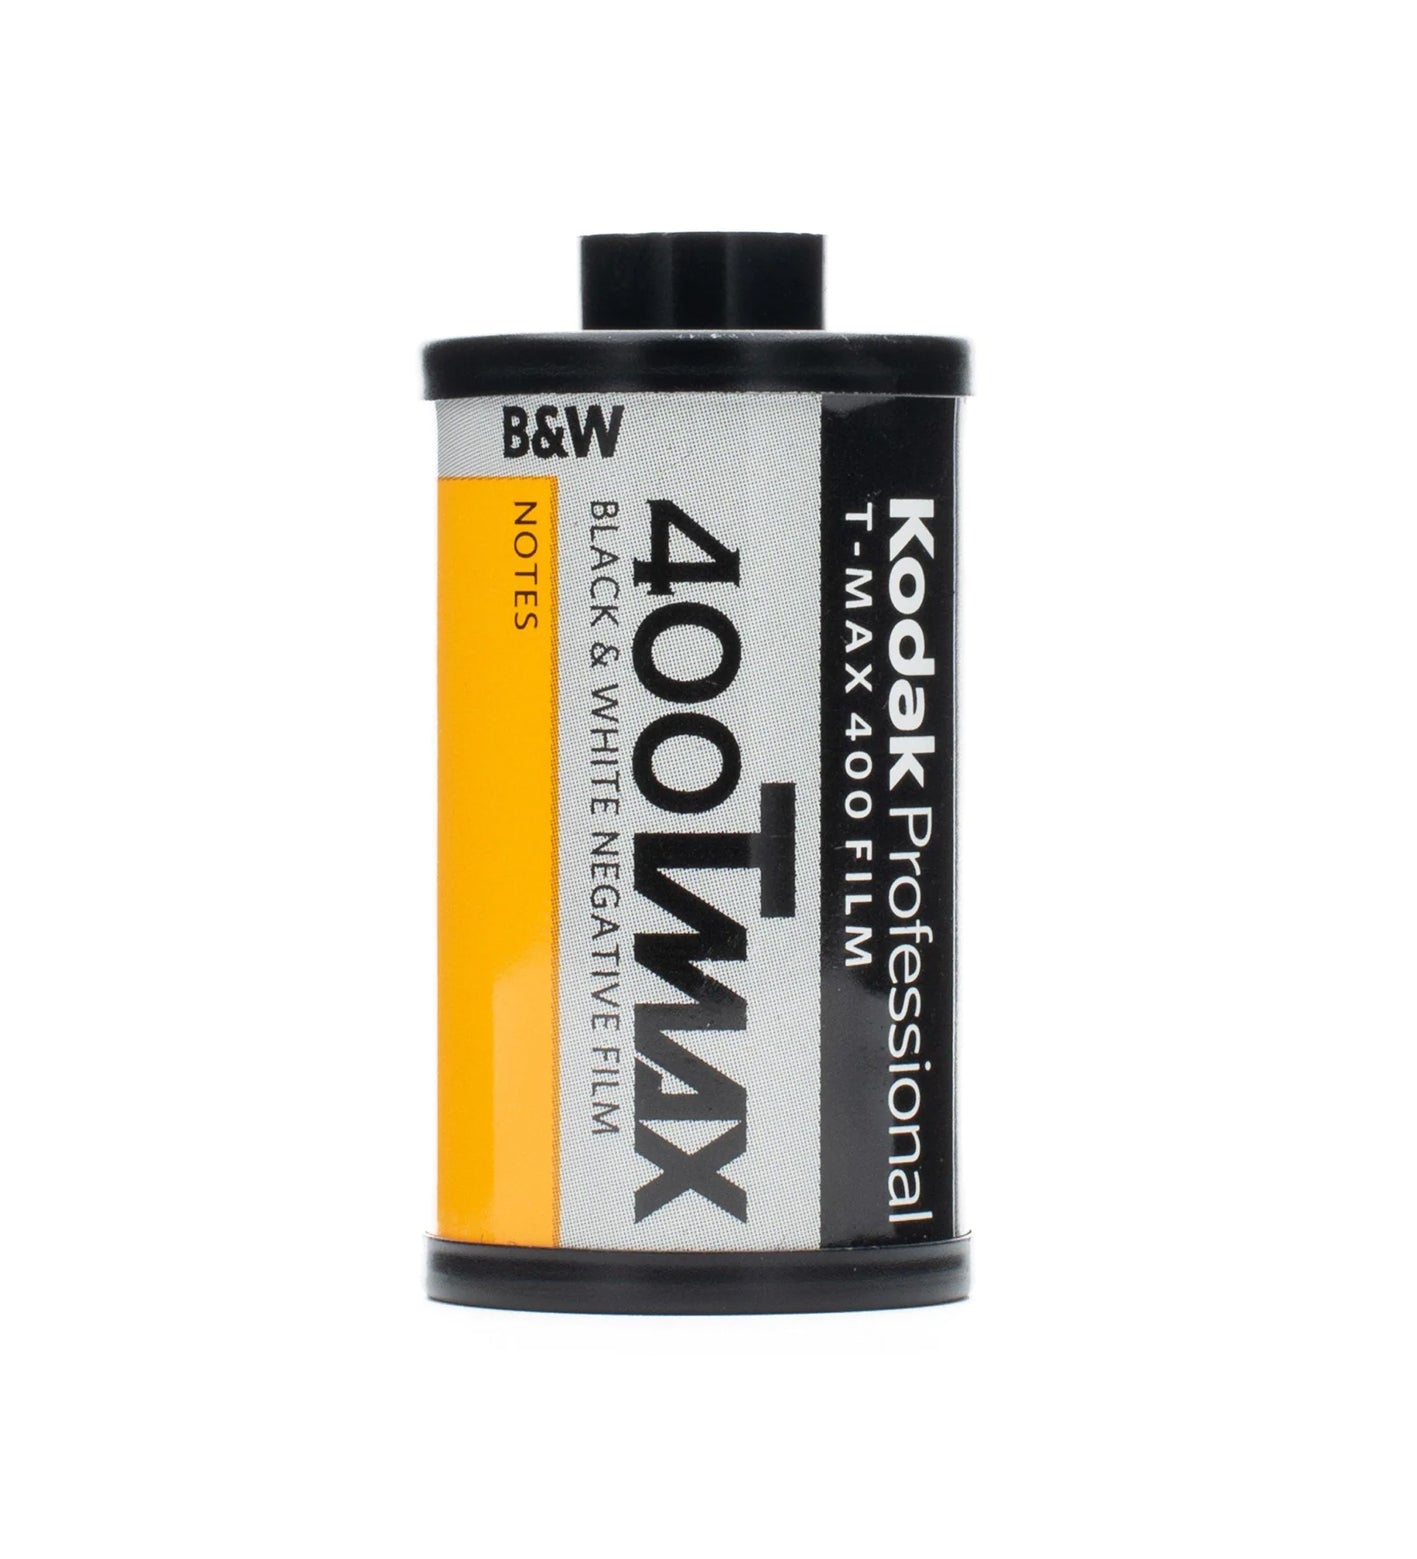 Kodak T-Max 400 35mm Film 36 Exposures (£13.99 incl VAT)